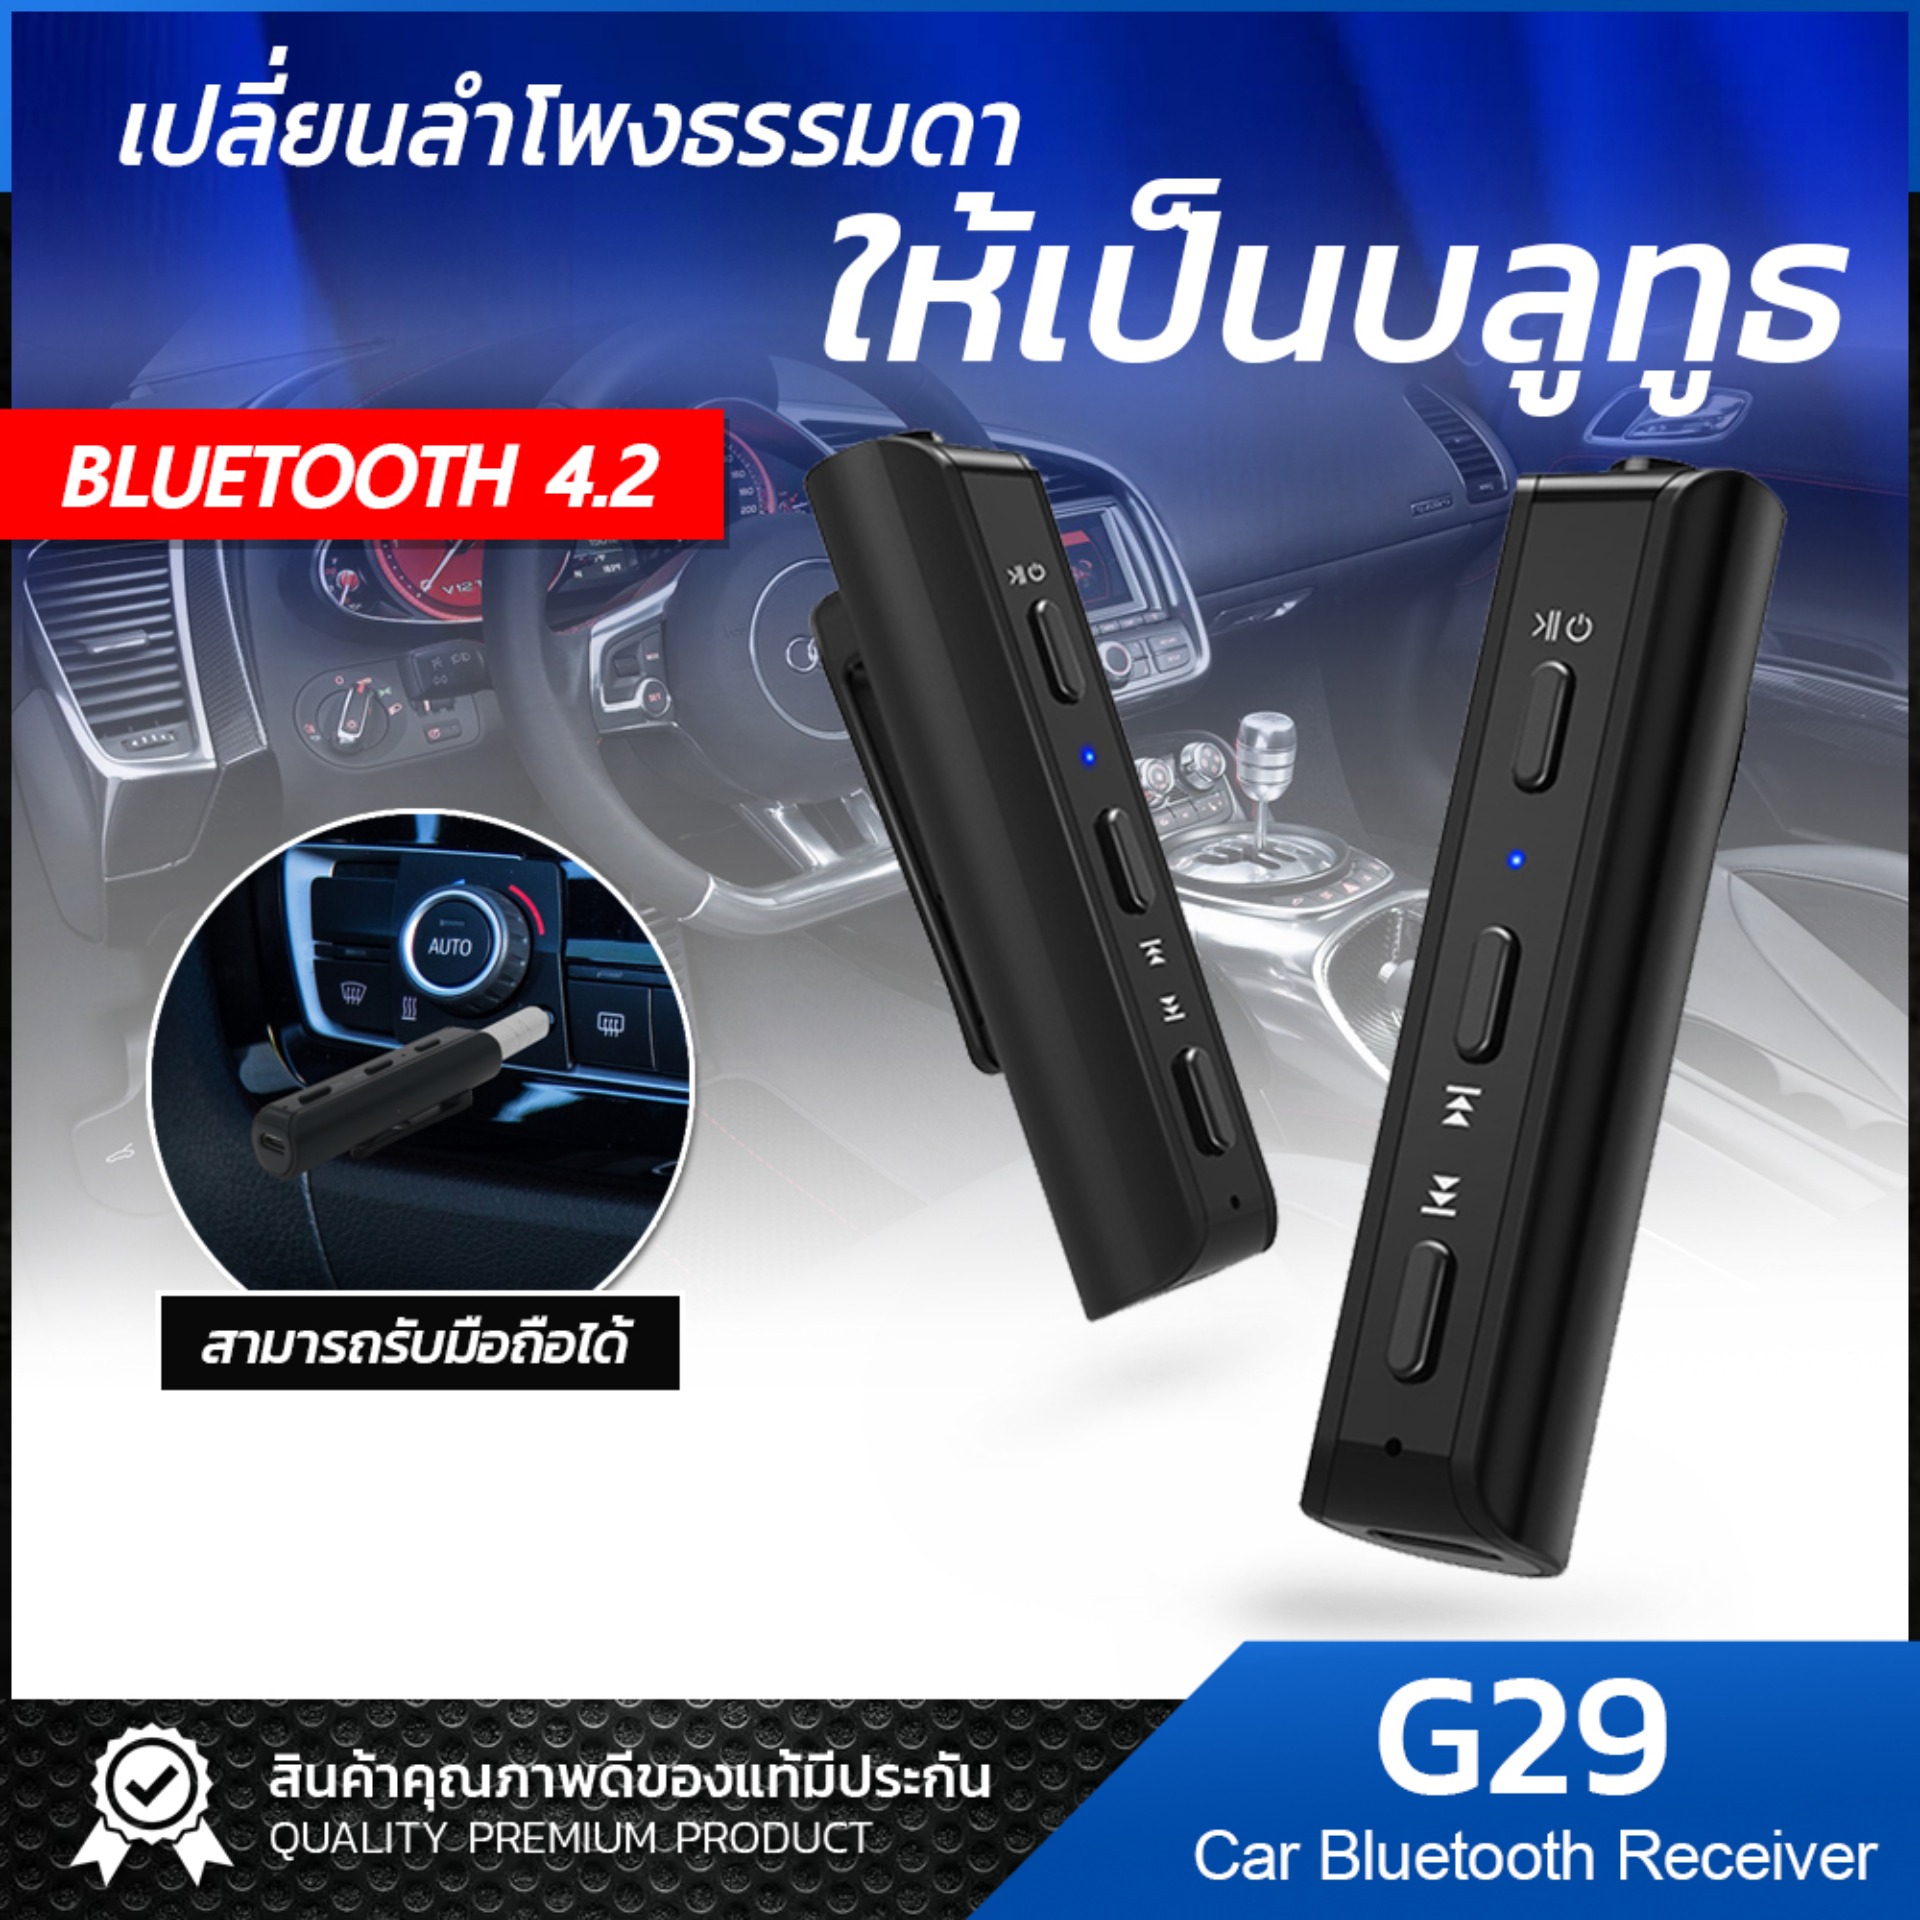 Original ตัวรับสัญญาณบูลทูธ Car Bluetooth V 4.2 AUX 3.5mm Jack Bluetooth Receiver Handsfree Call Bluetooth Adapter Car Transmitter Auto Music Receivers Small talk ใช้งานต่อเนื่องนานถึง 6 ชั่วโมง / Car kit store